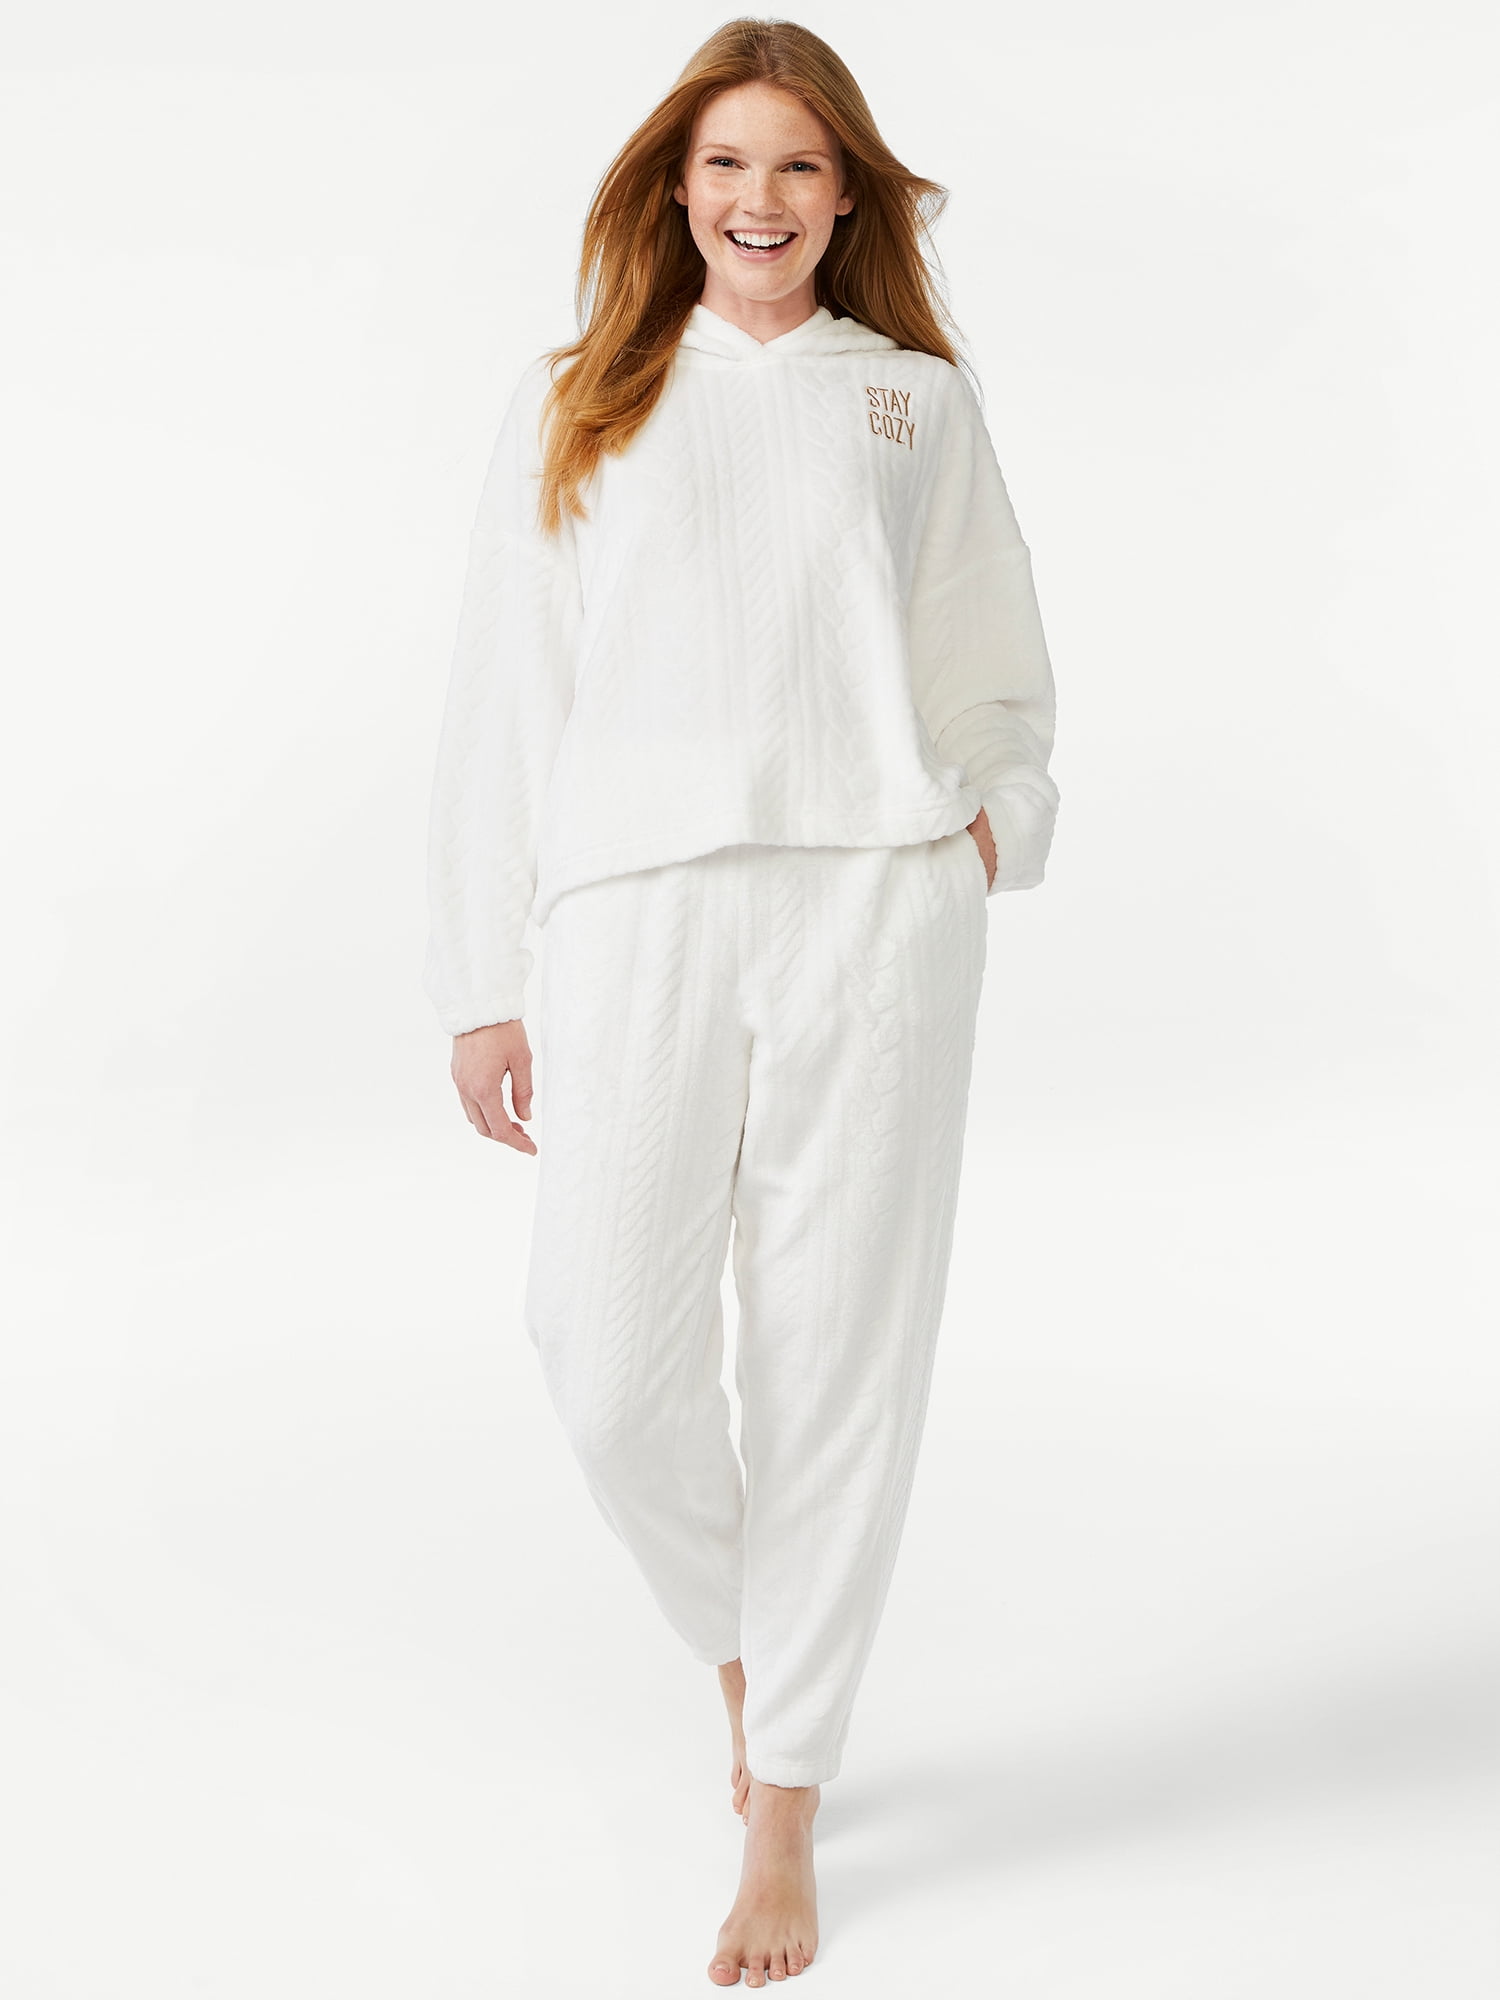 Joyspun Women's Plush Cable Long Sleeve Hooded Top and Pants Pajama Set, 2-Piece, Sizes up to 3X